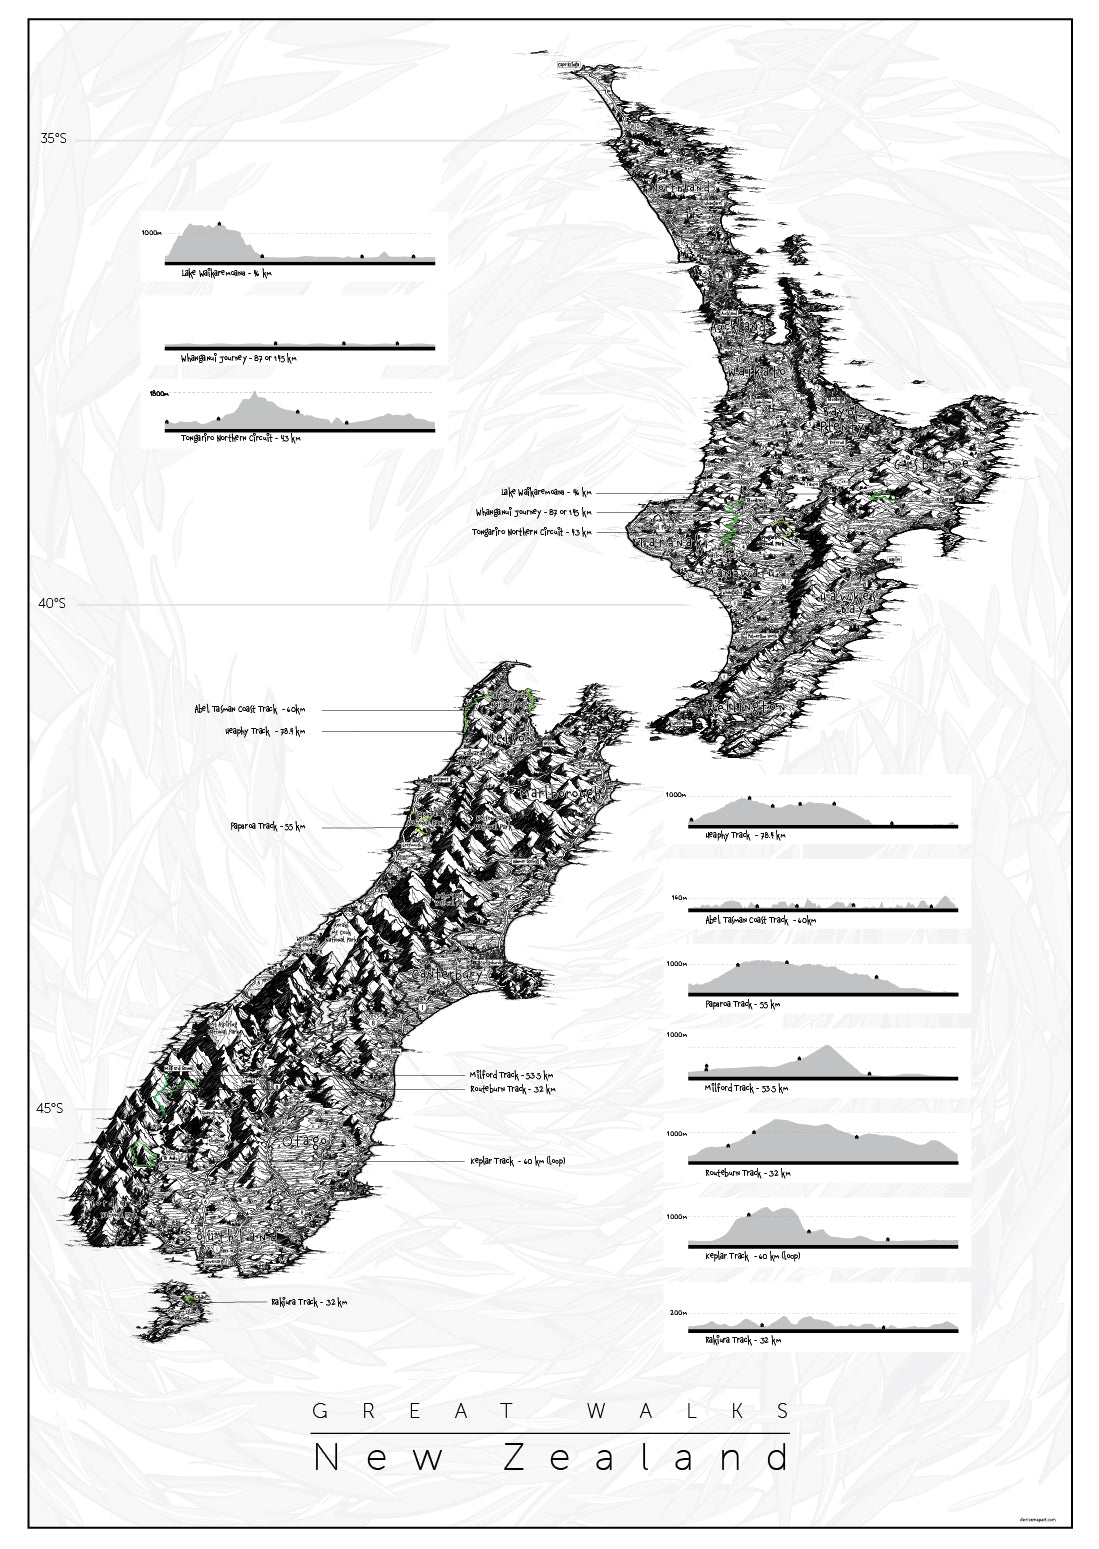 Great New Zealand Walks map artwork